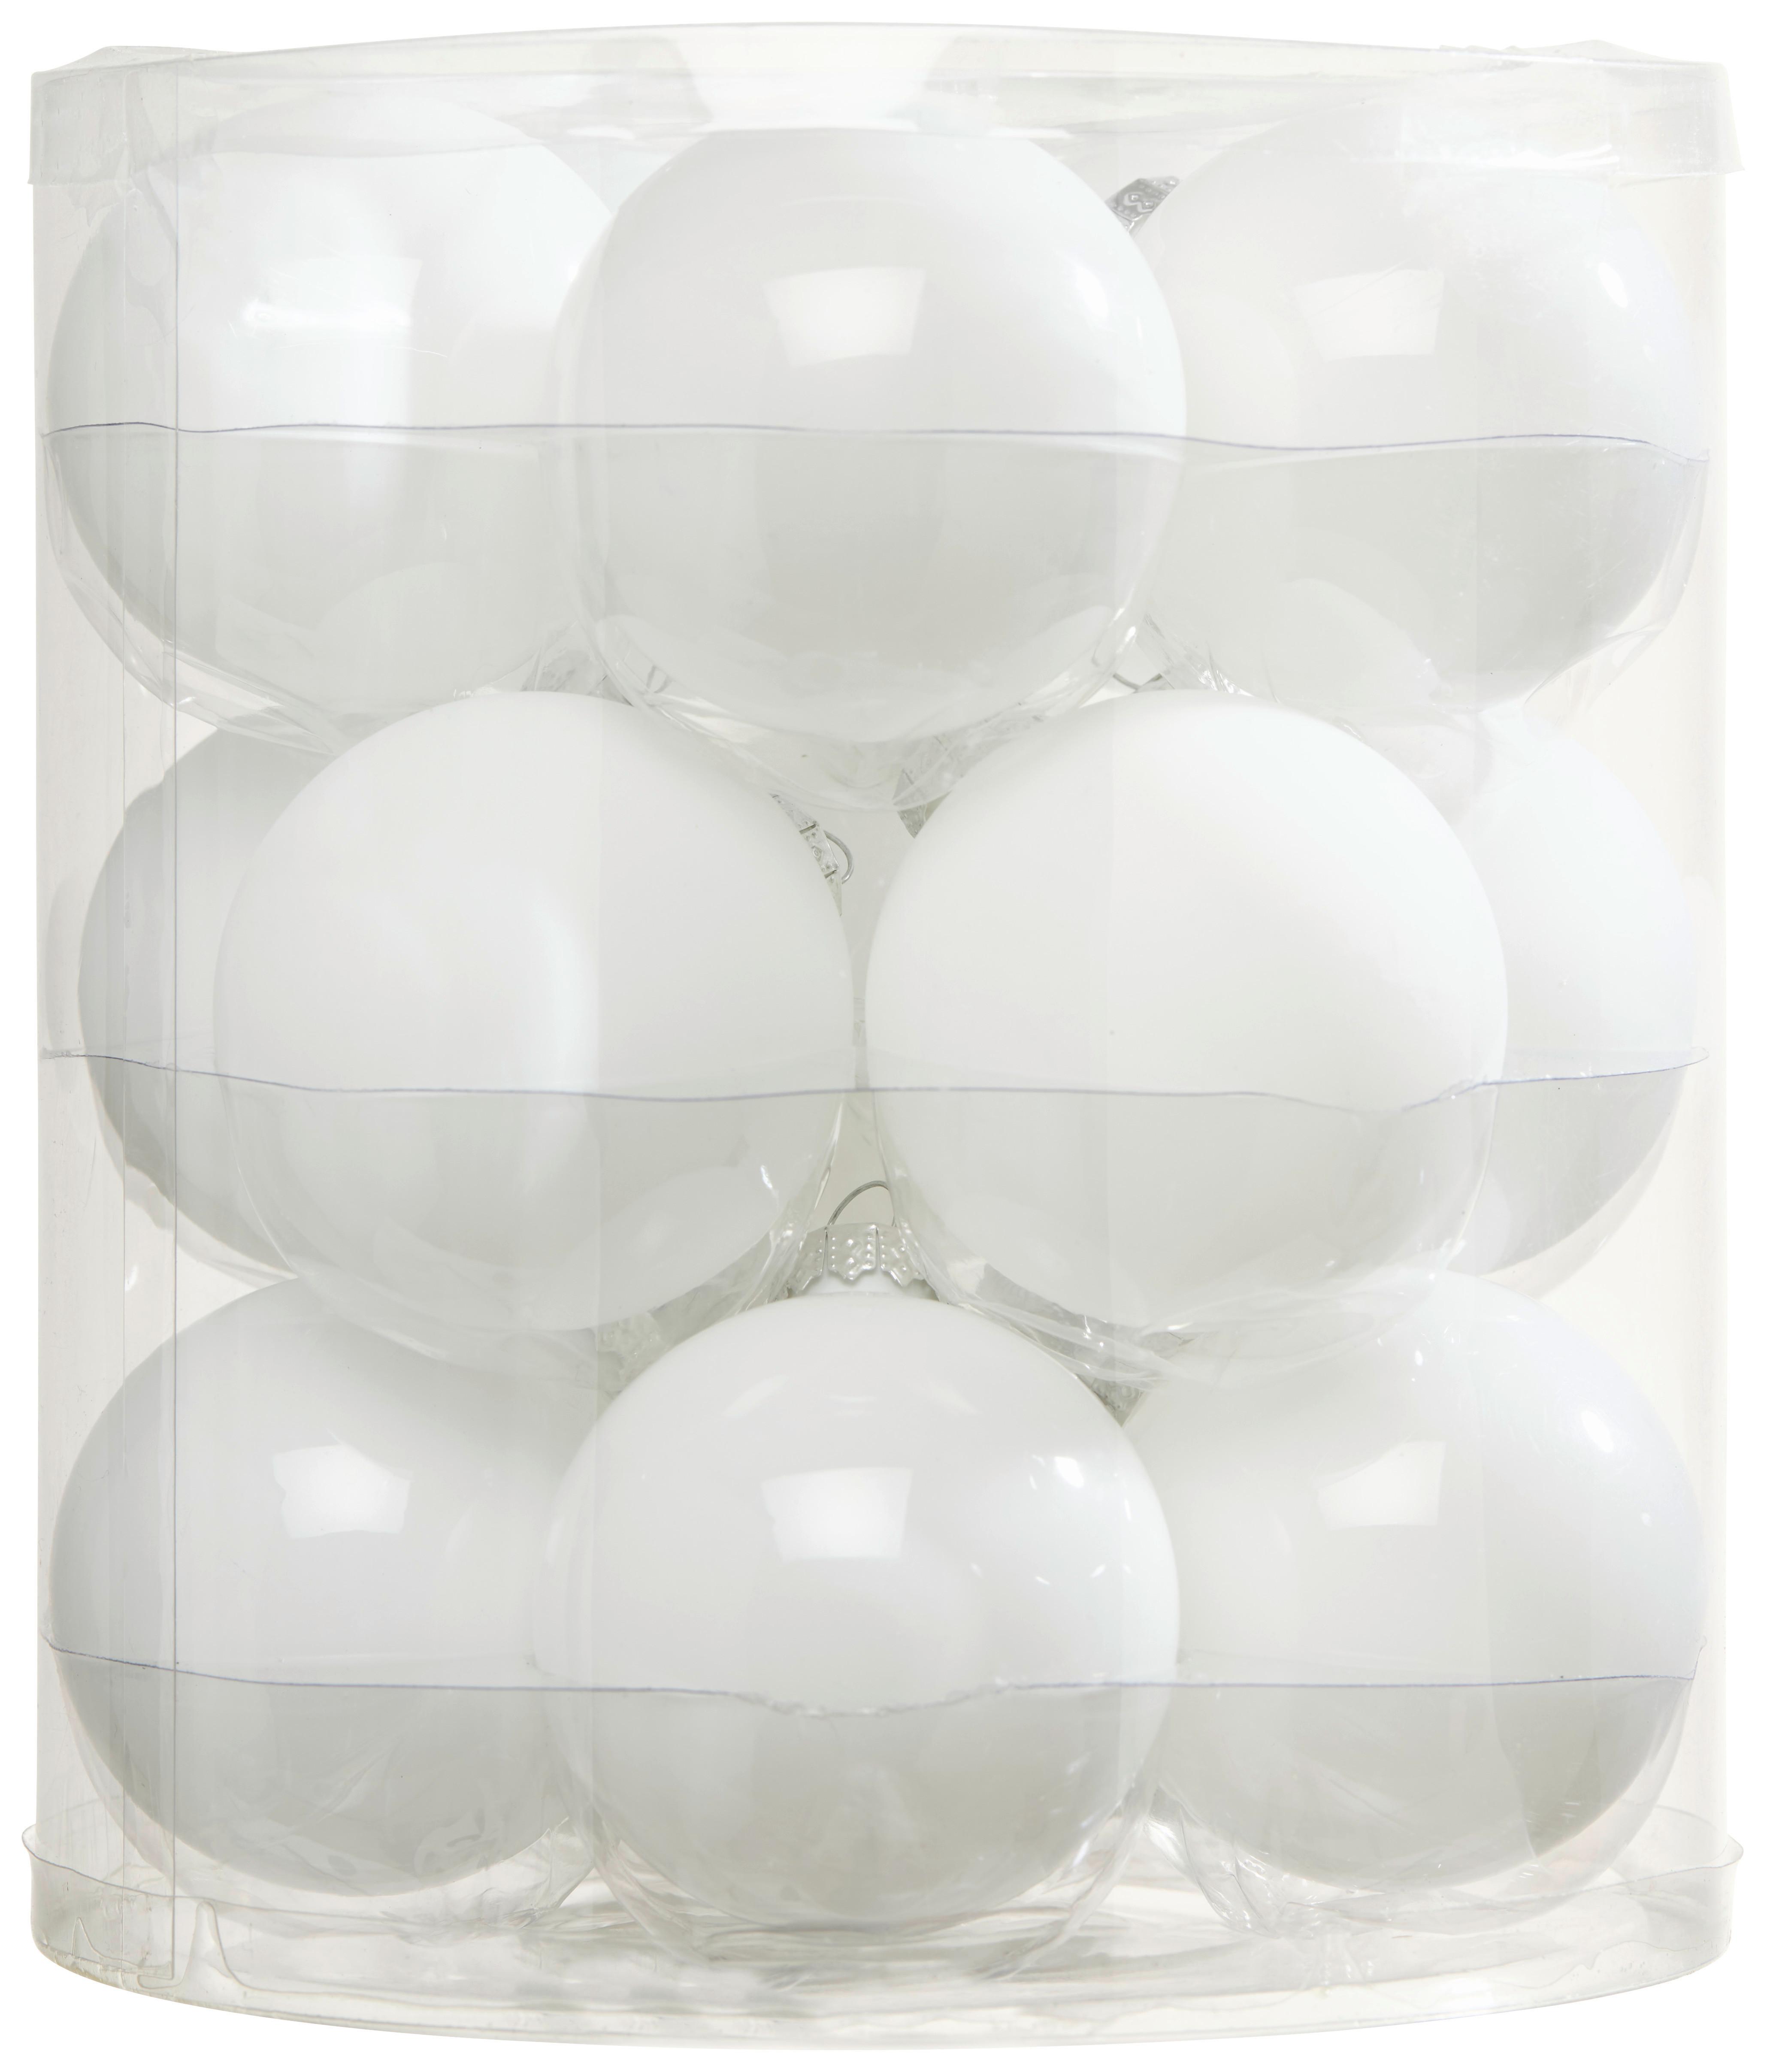 Baňky Na Vánoční Stromeček Noel, Ø: 6cm, 15ks/bal. - bílá, Basics, sklo (6cm) - Modern Living